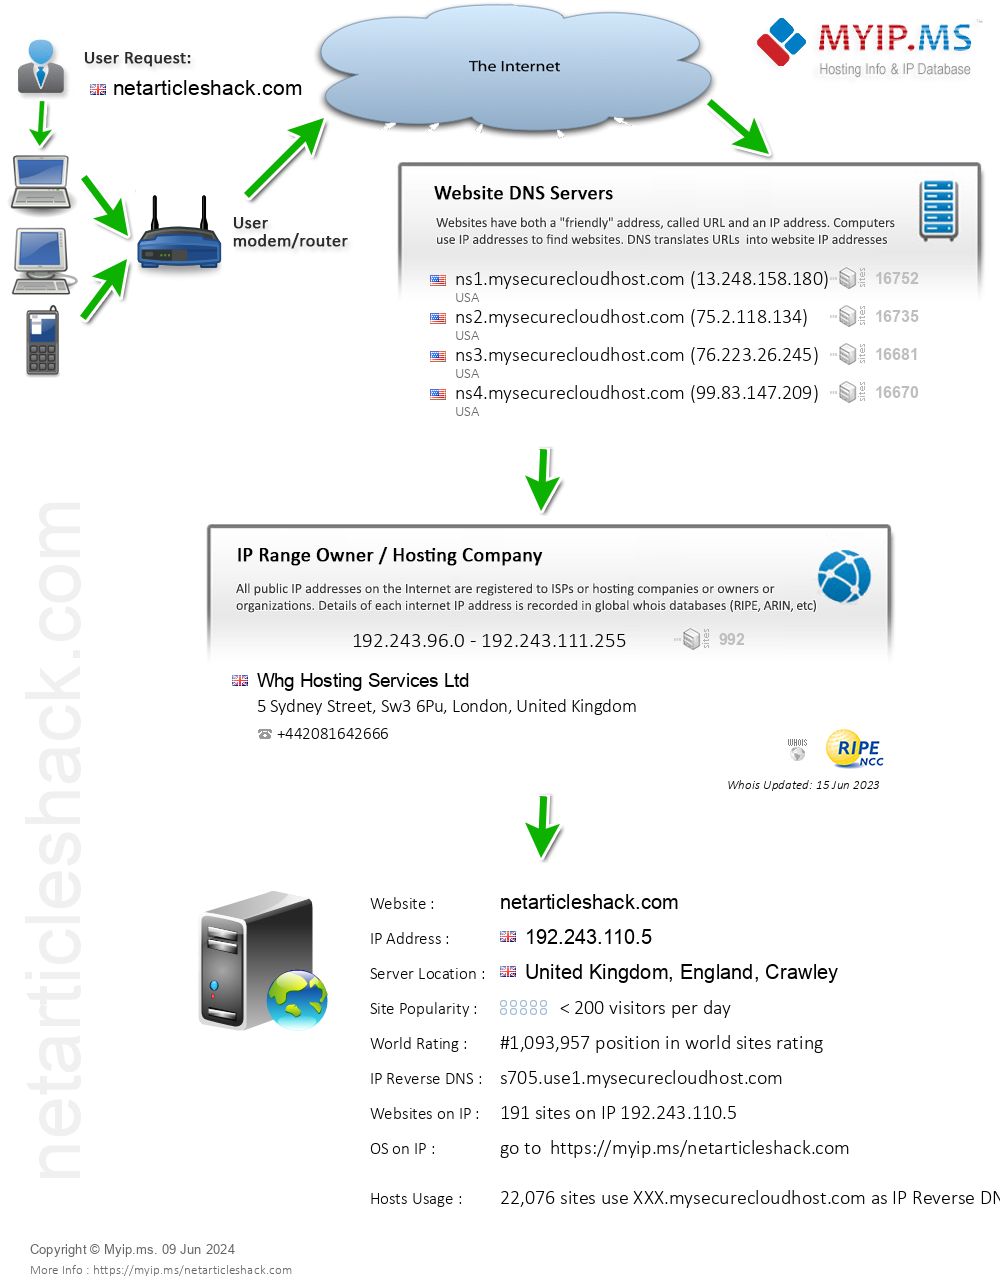 Netarticleshack.com - Website Hosting Visual IP Diagram